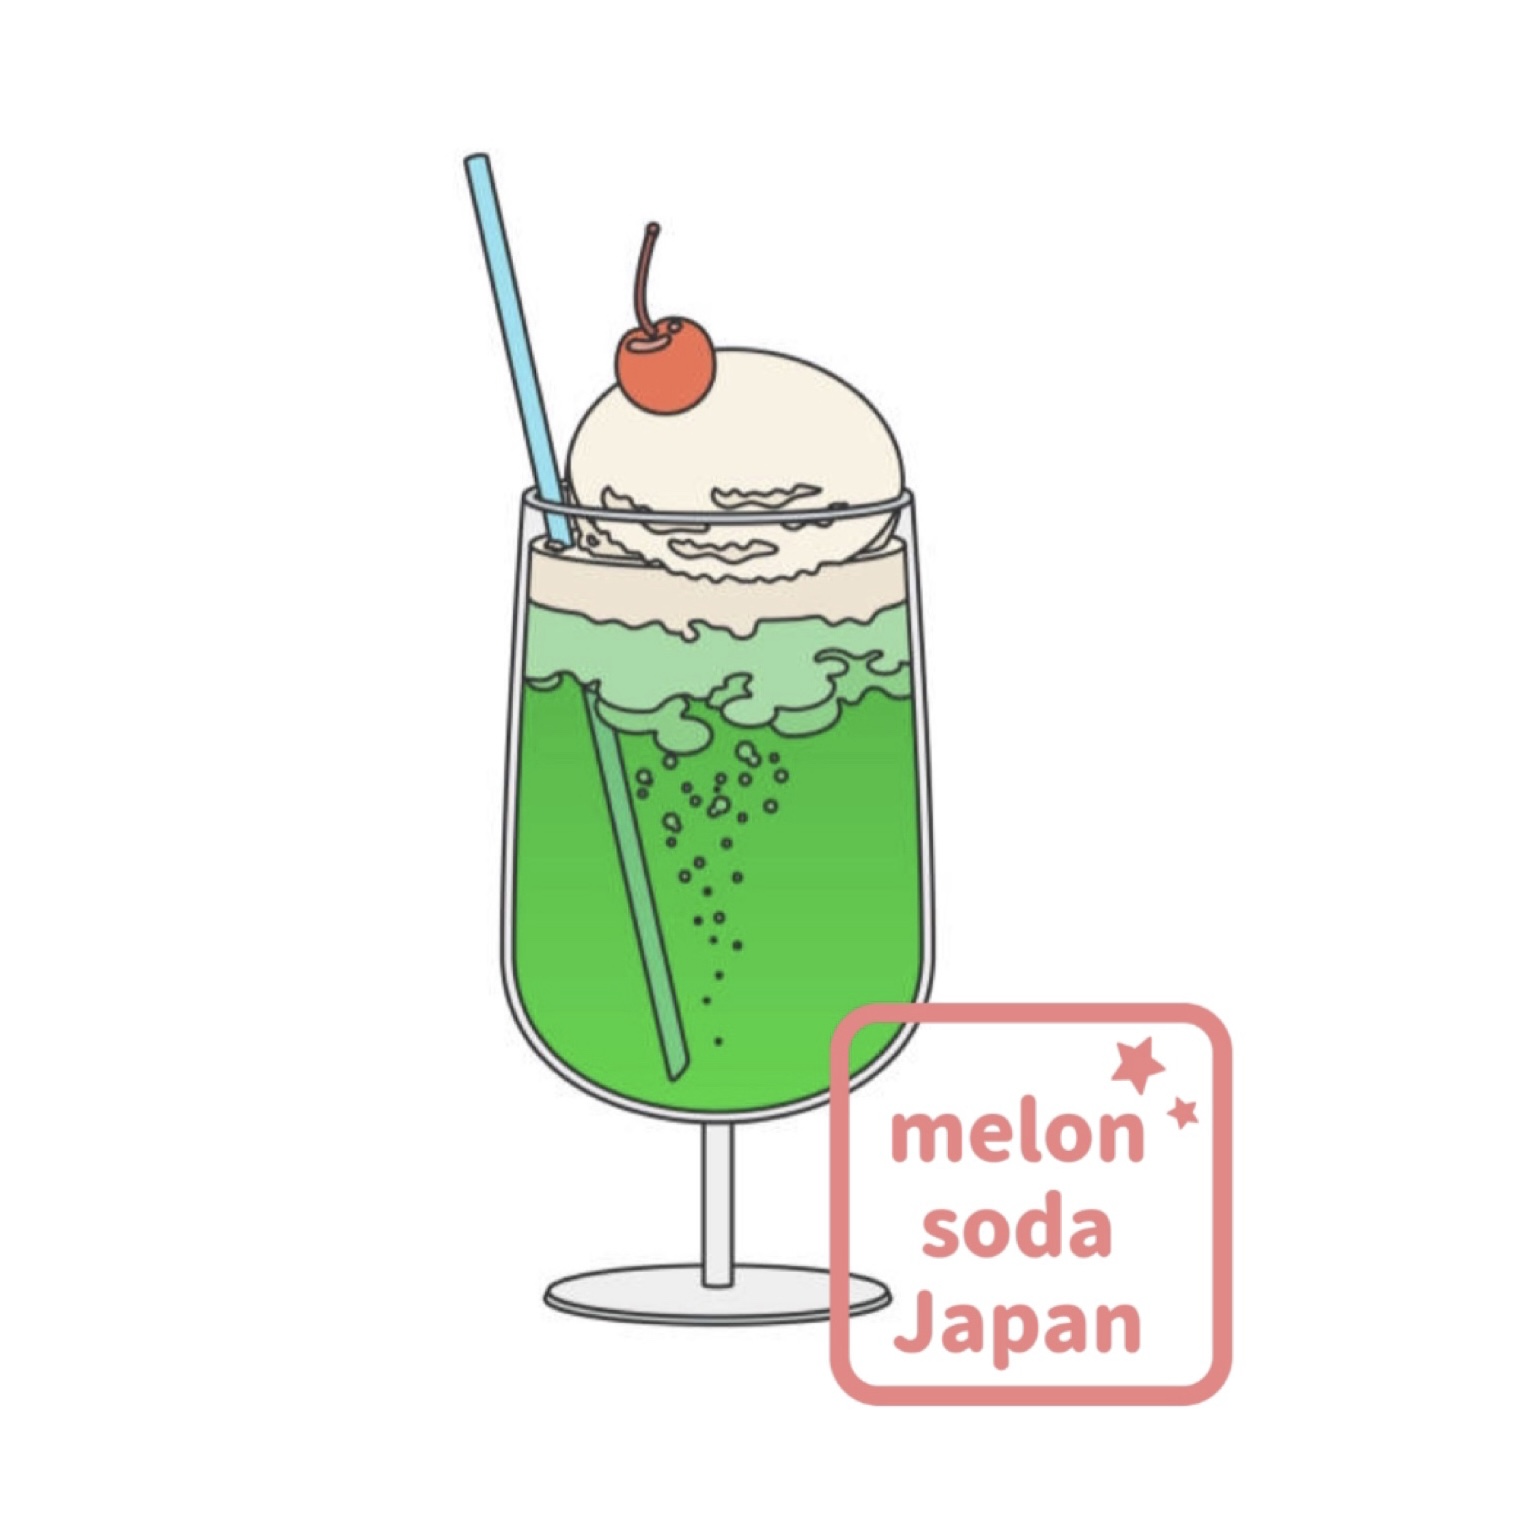 Melon Soda Japan